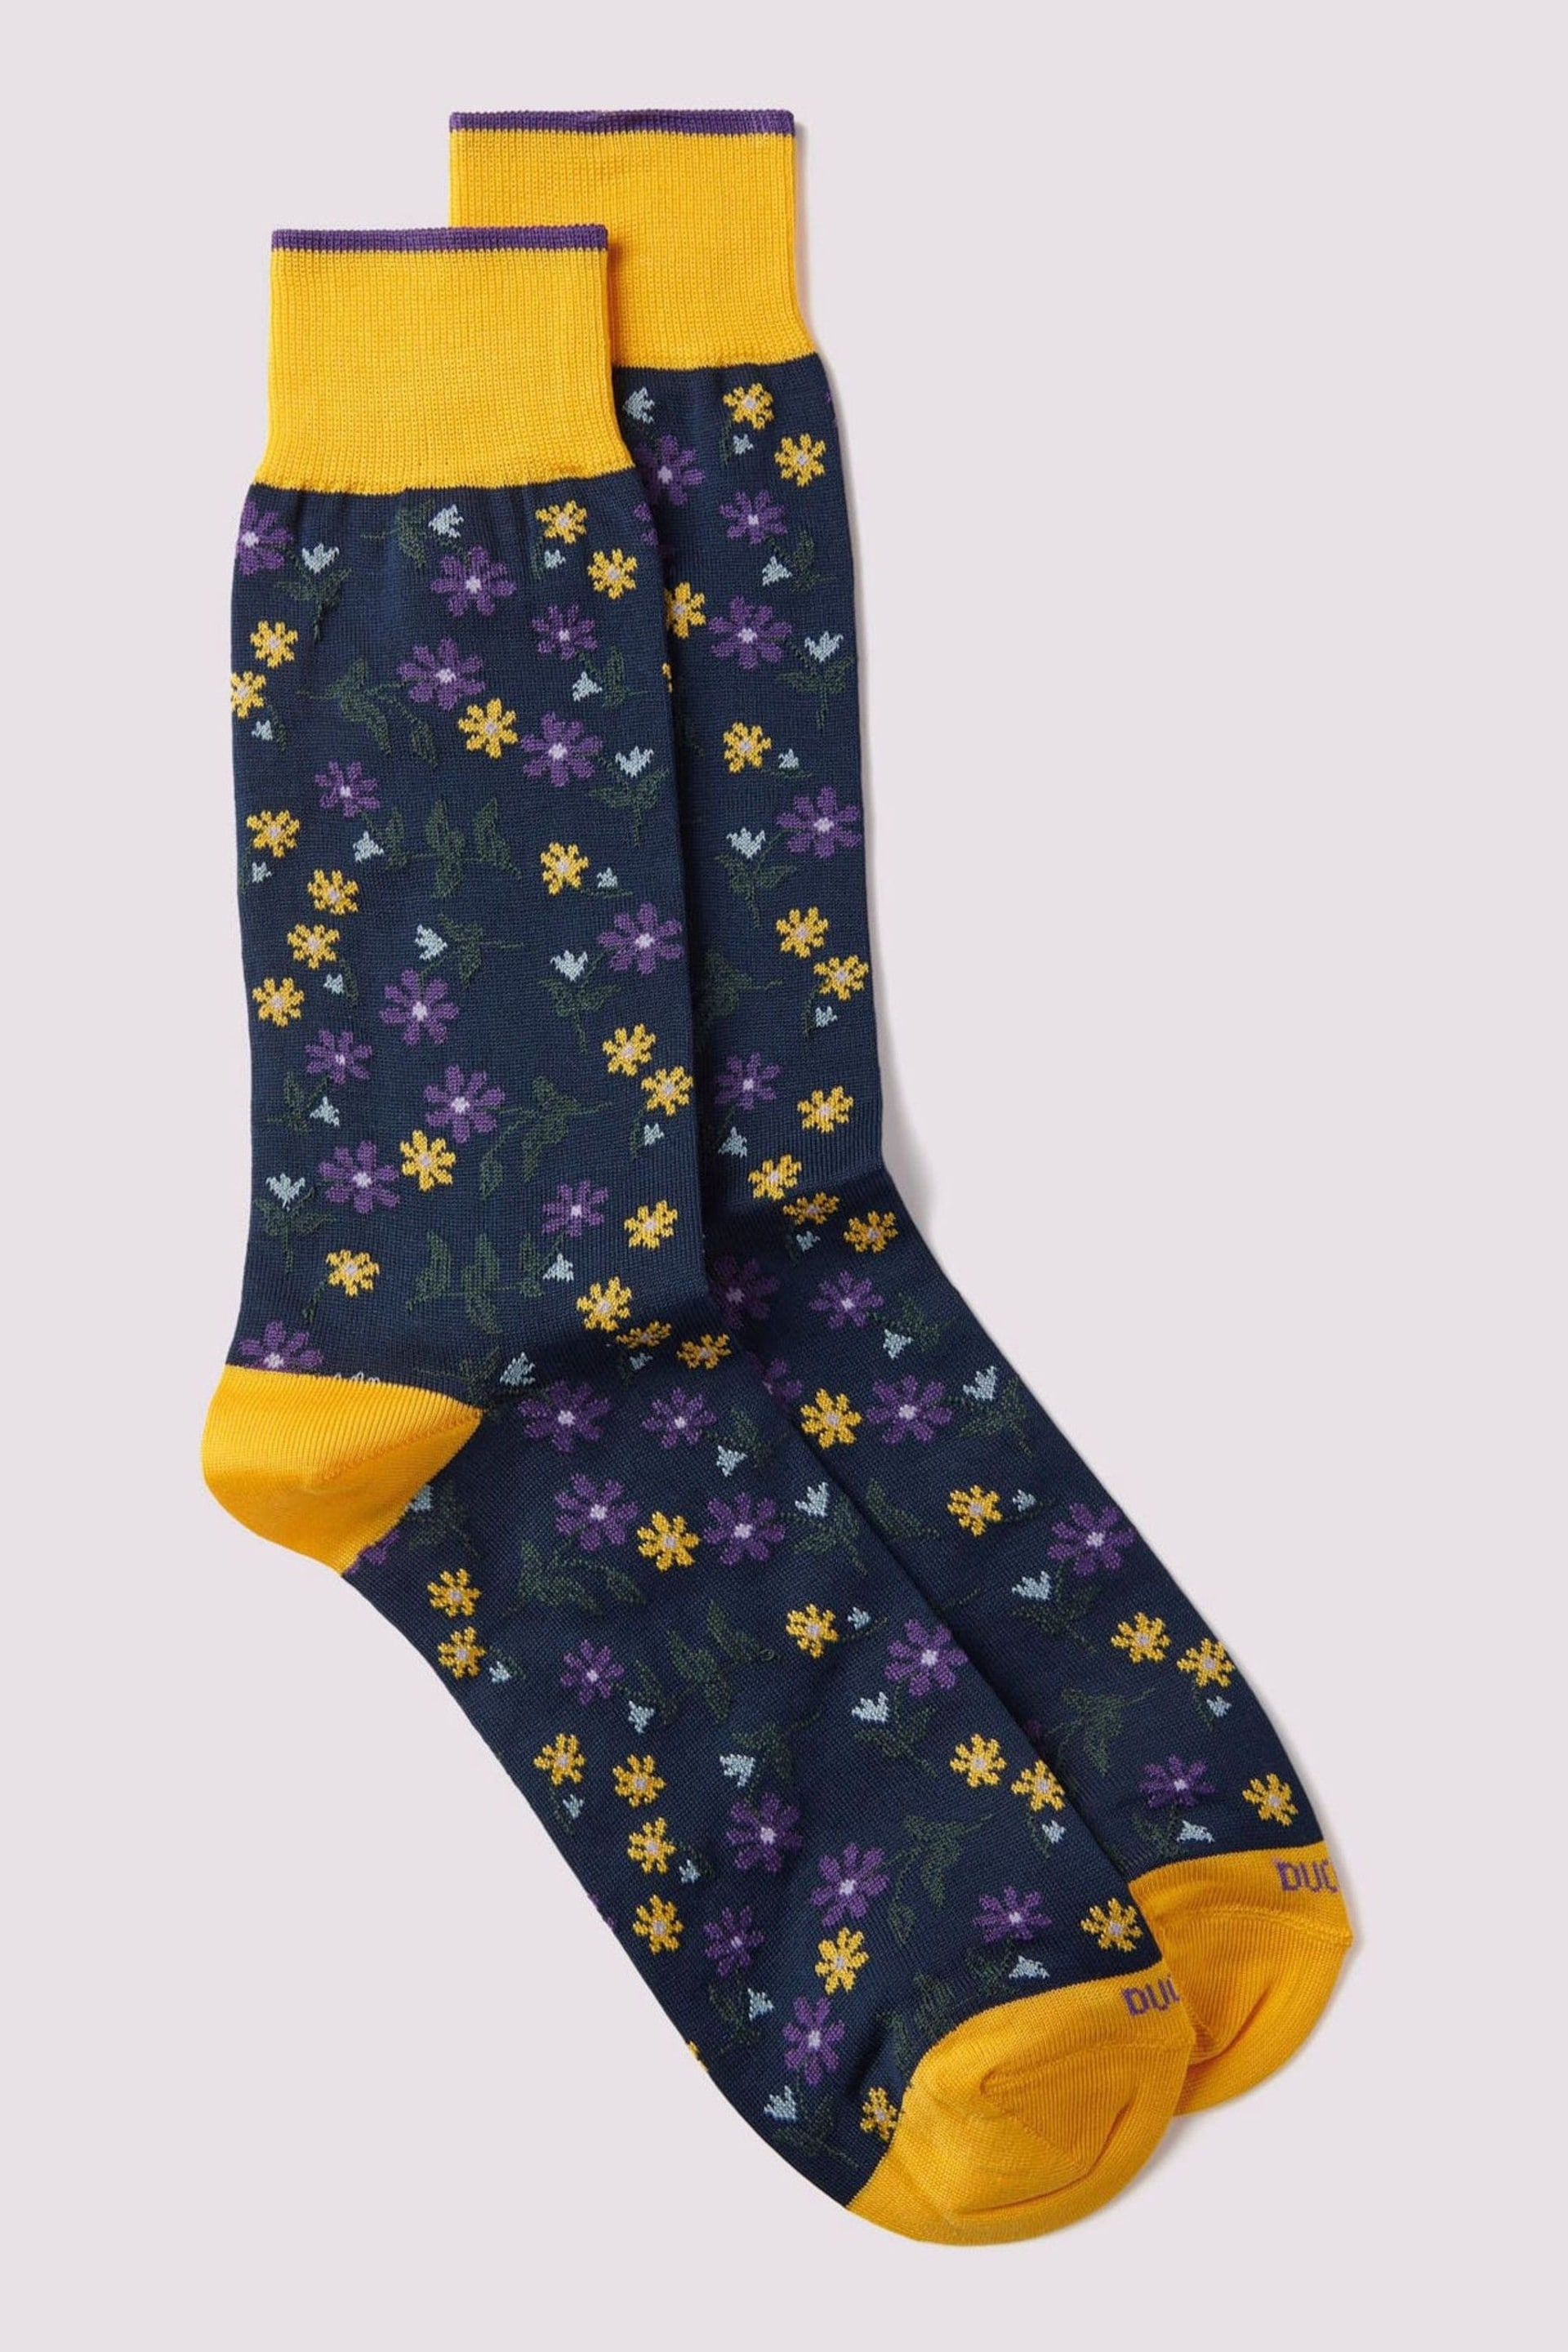 Duchamp Yellow Garden Floral Socks - Image 2 of 3